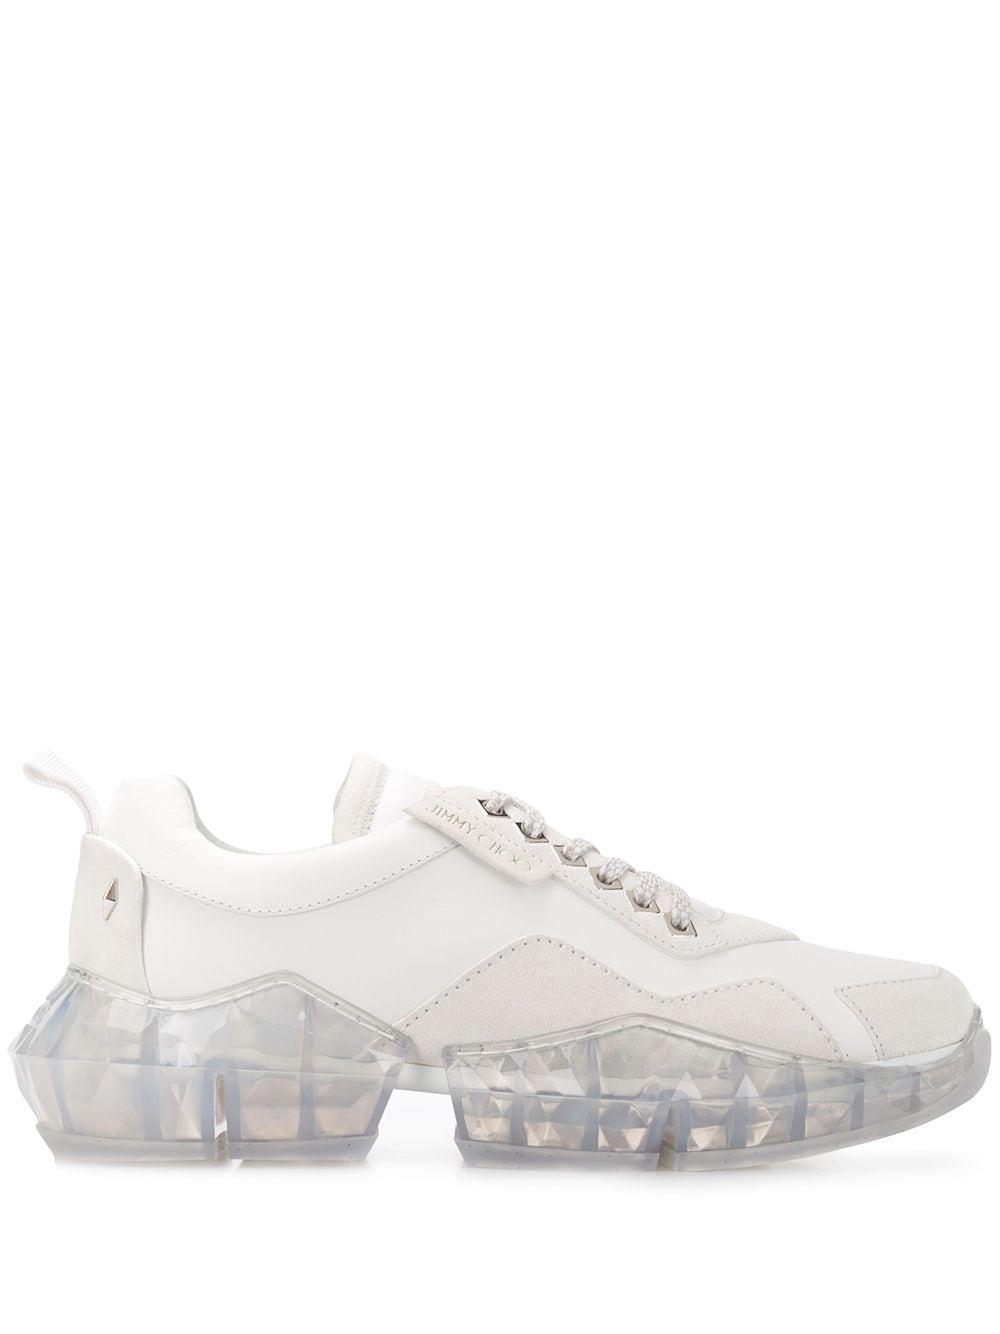 Jimmy Choo Leather Diamond Sneakers in White for Men - Lyst